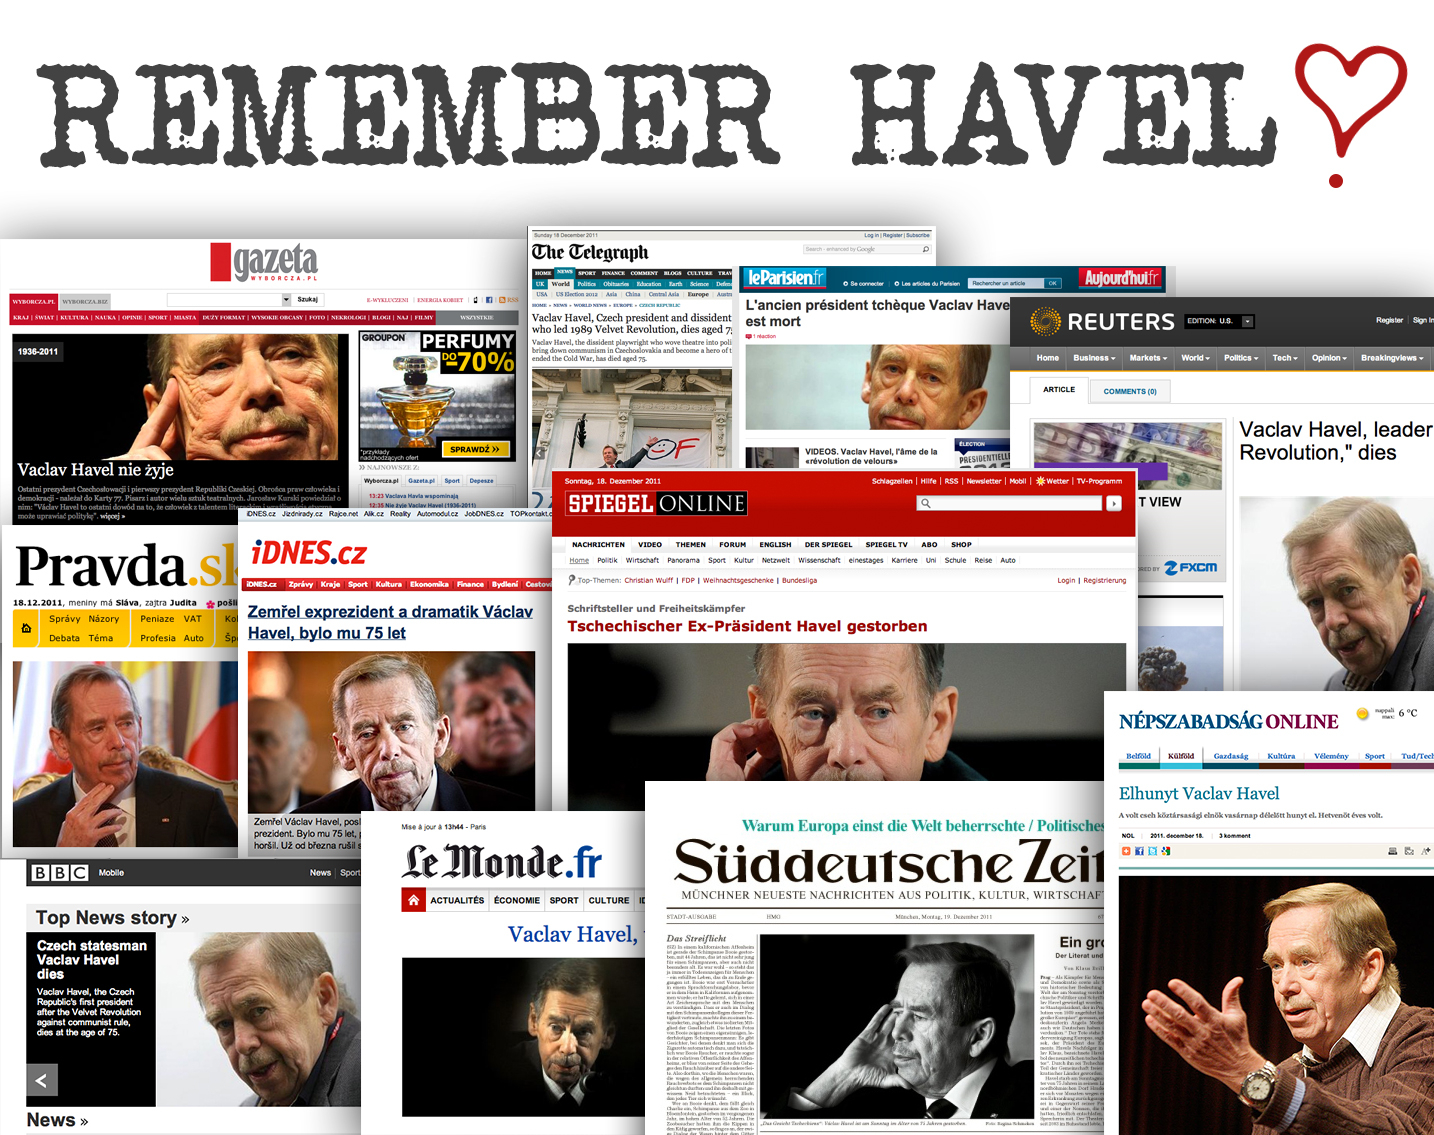 Remember Havel